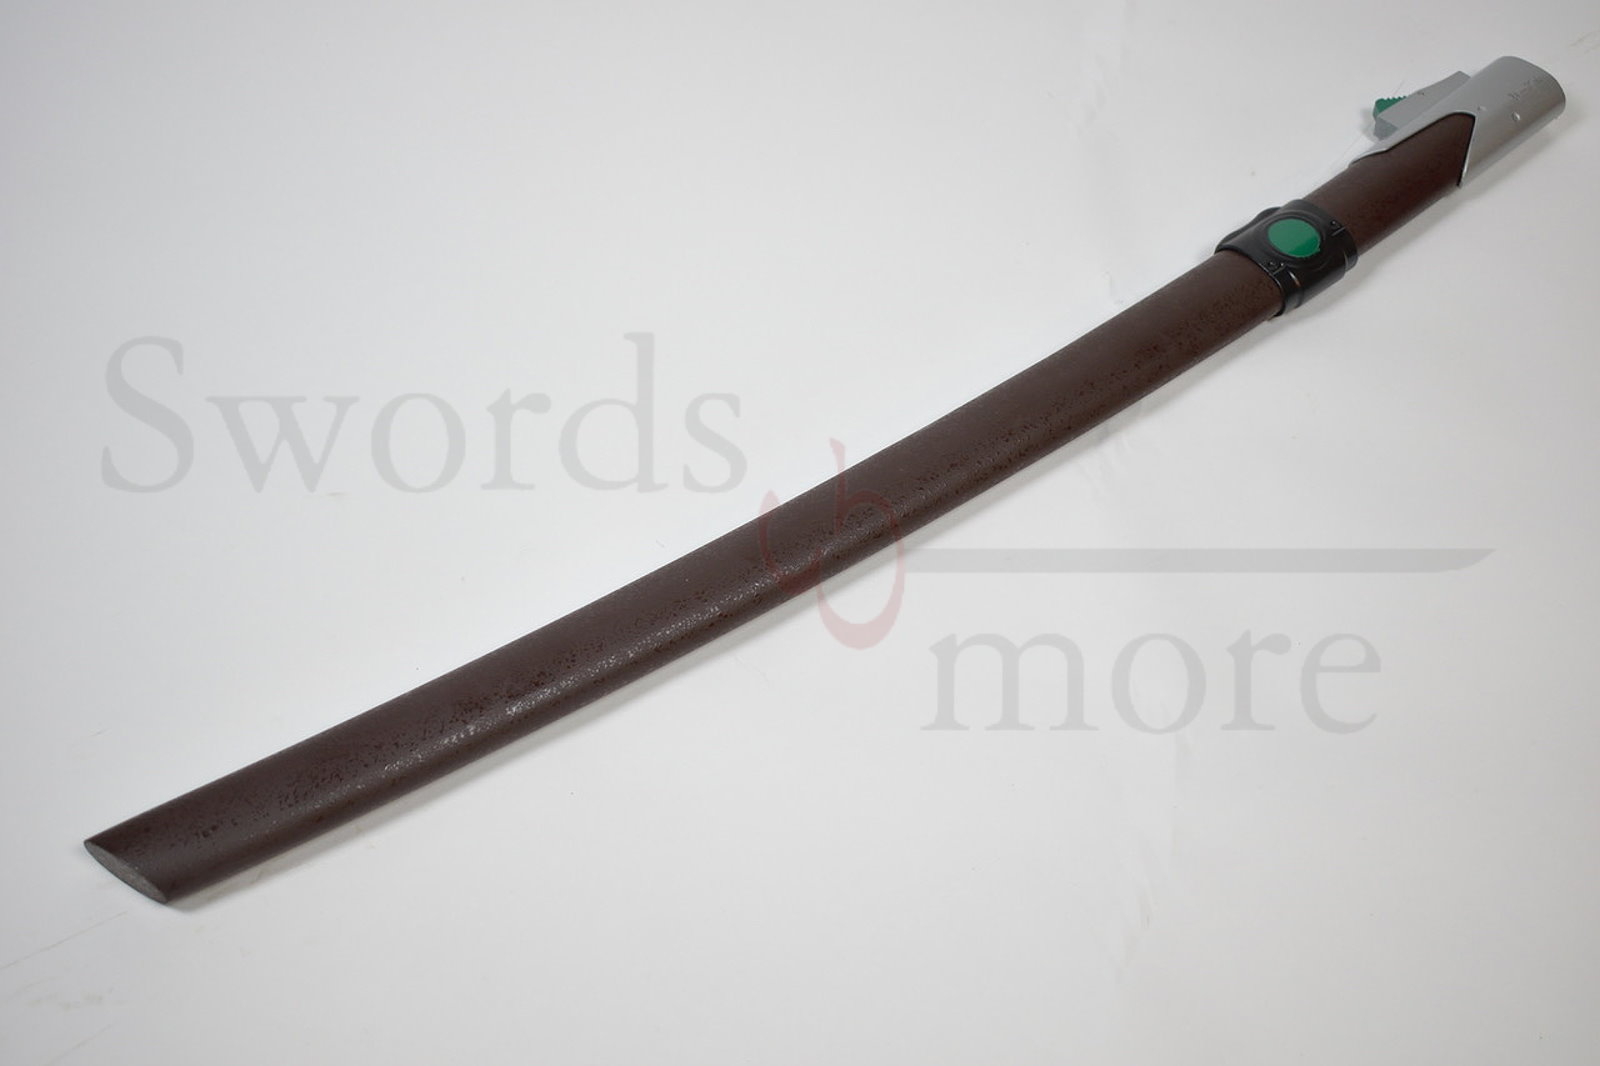 Overwatch - Sword of Genji, handforged